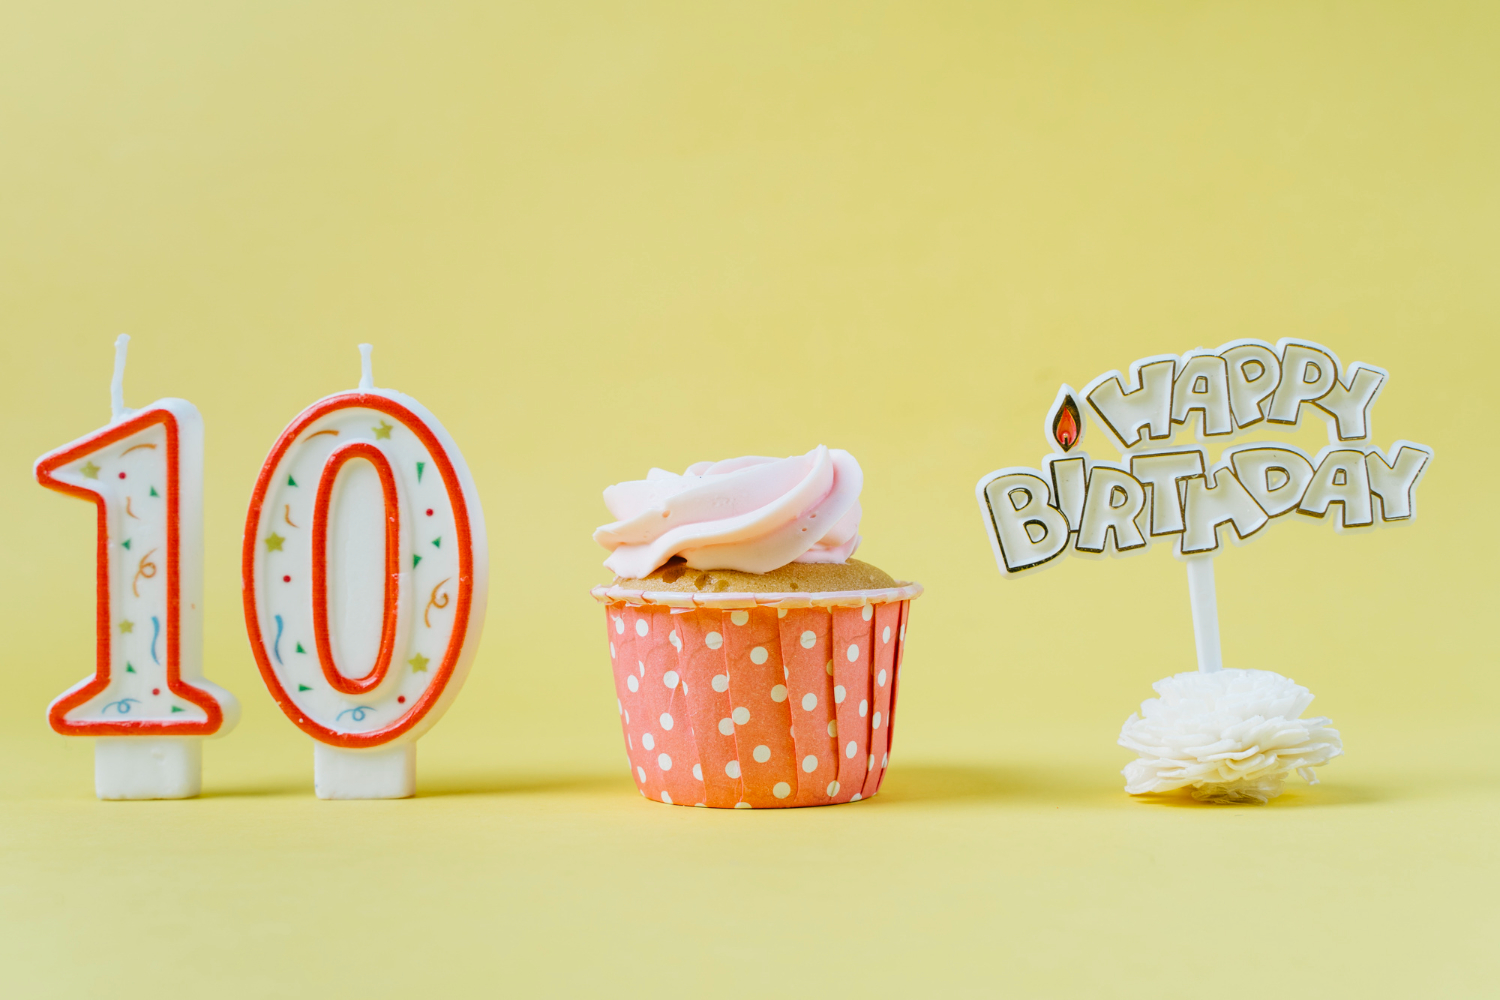 Top 10 Happy Birthday Wishes